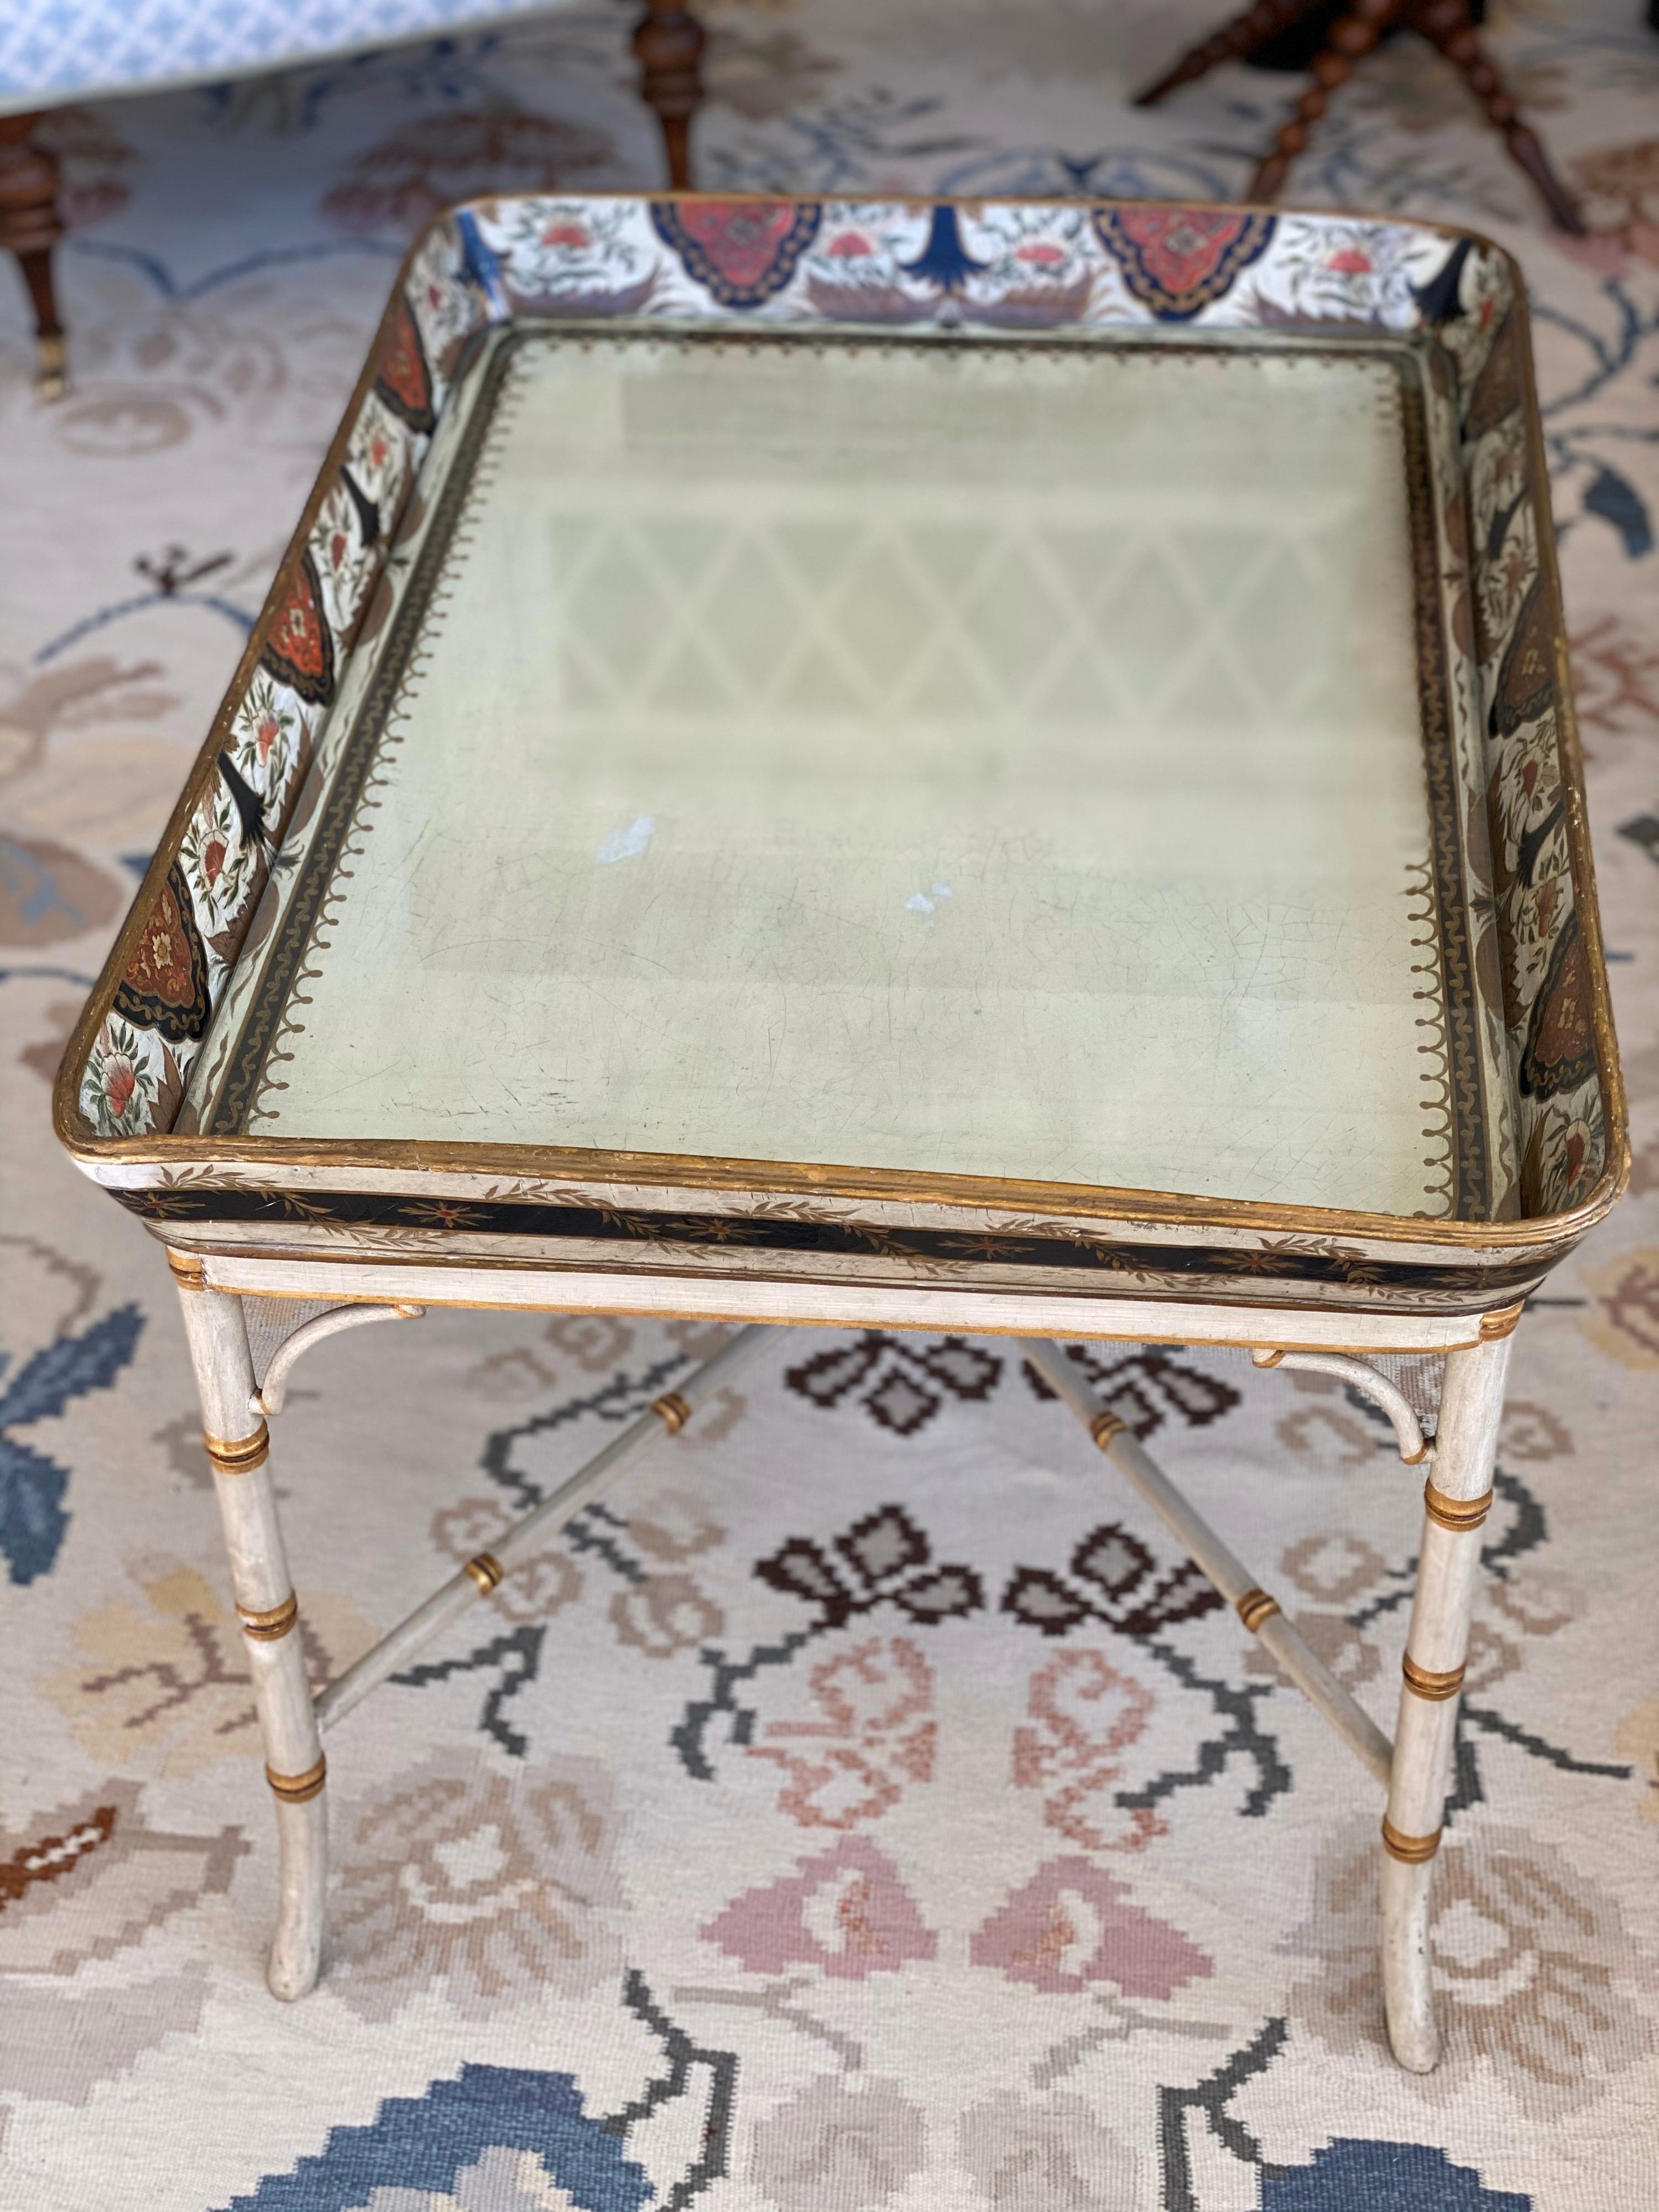 Regency Polychrome and Cream Decorated Papier Mâché Tray Table, circa 1810 1